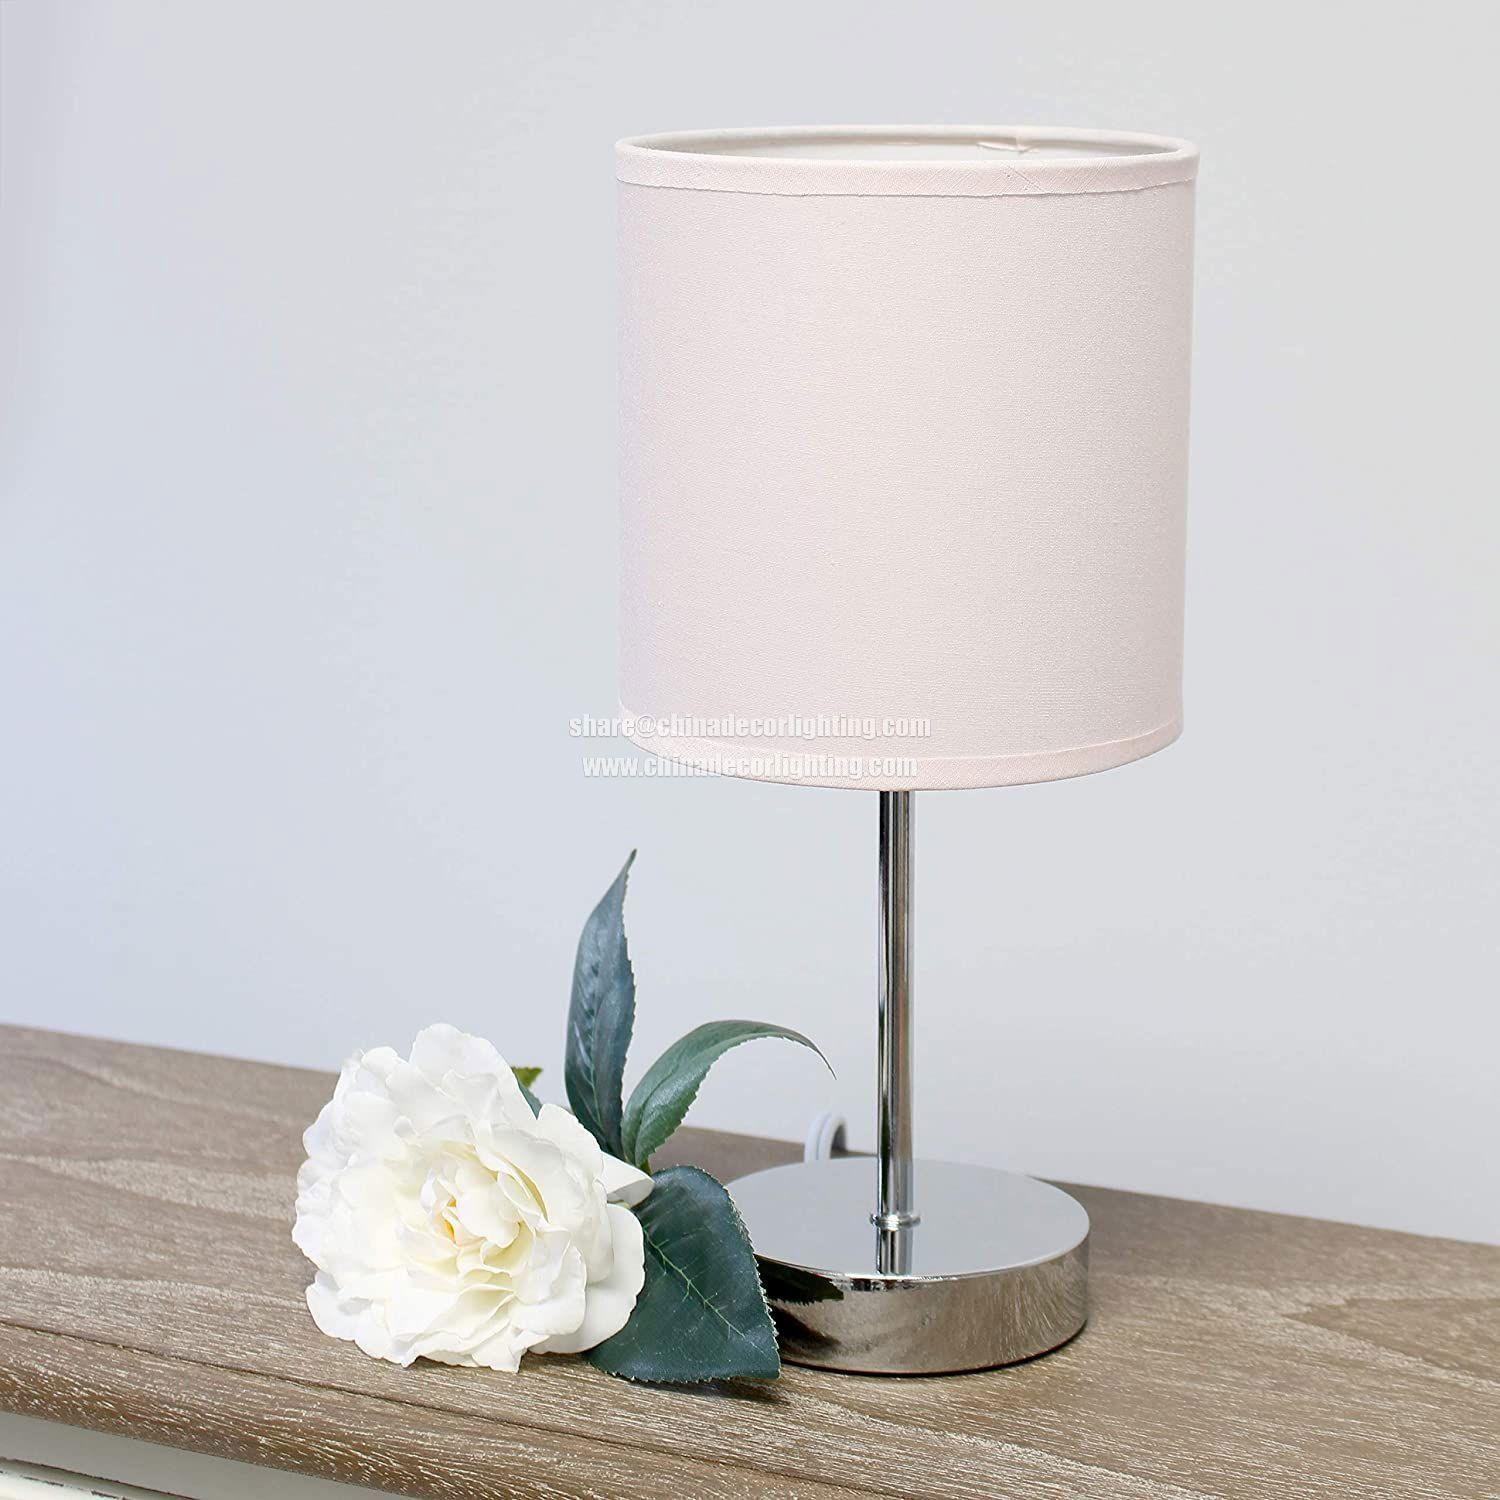 Manufacture Wholesale Metal Bar Desk Light Modern Home Decor Bedroom Table Lamp 2